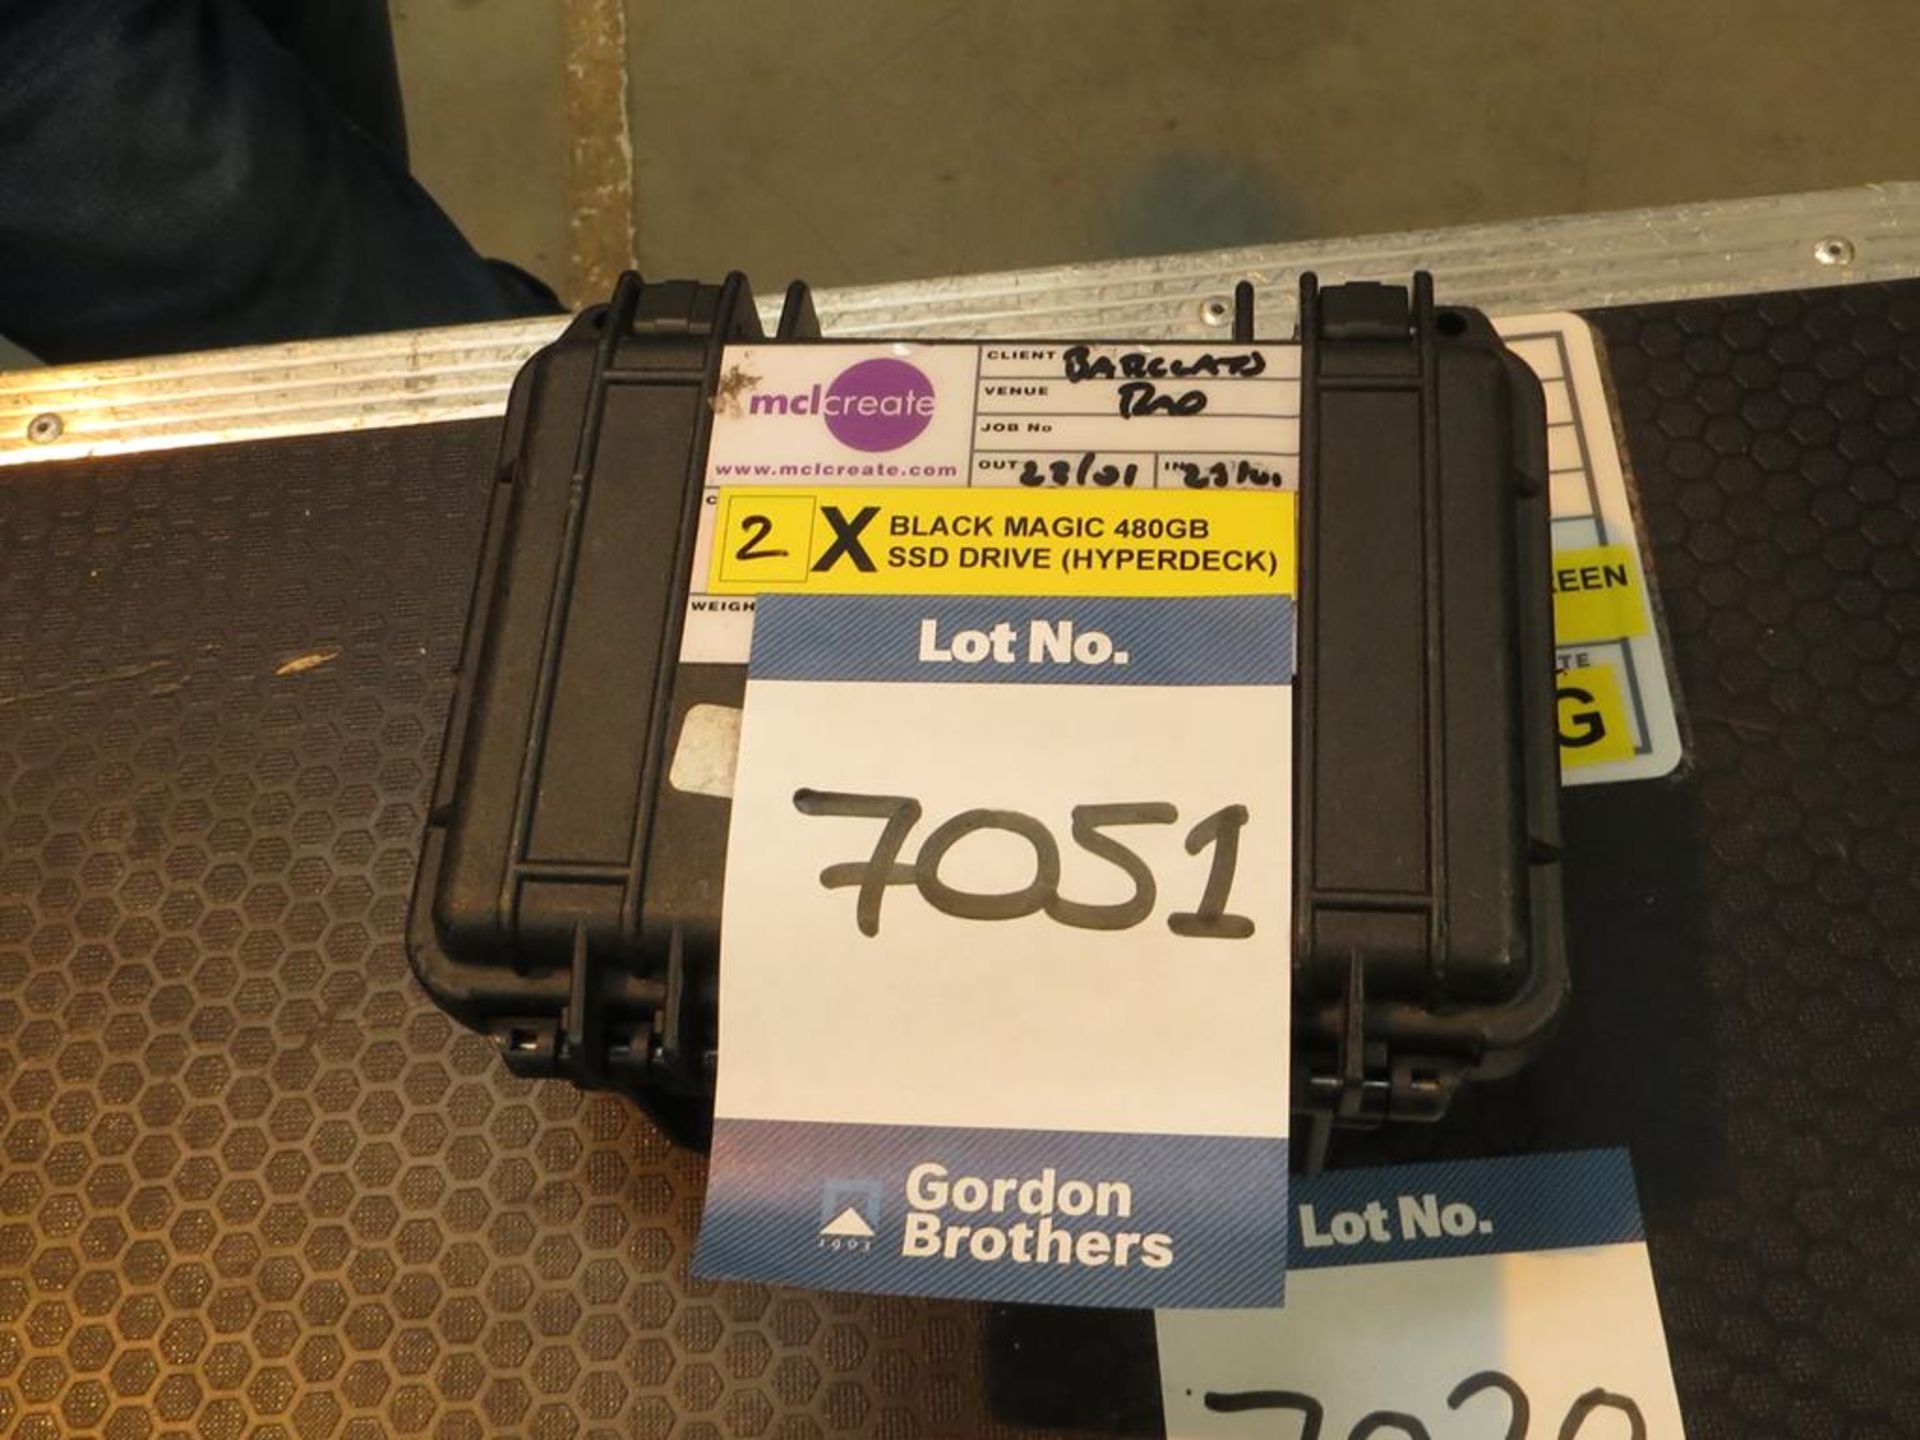 2x No. Sandisk, 480gb SSD memory cards in transit case: Unit C Moorside, 40 Dava Street, Glasgow G51 - Image 3 of 3